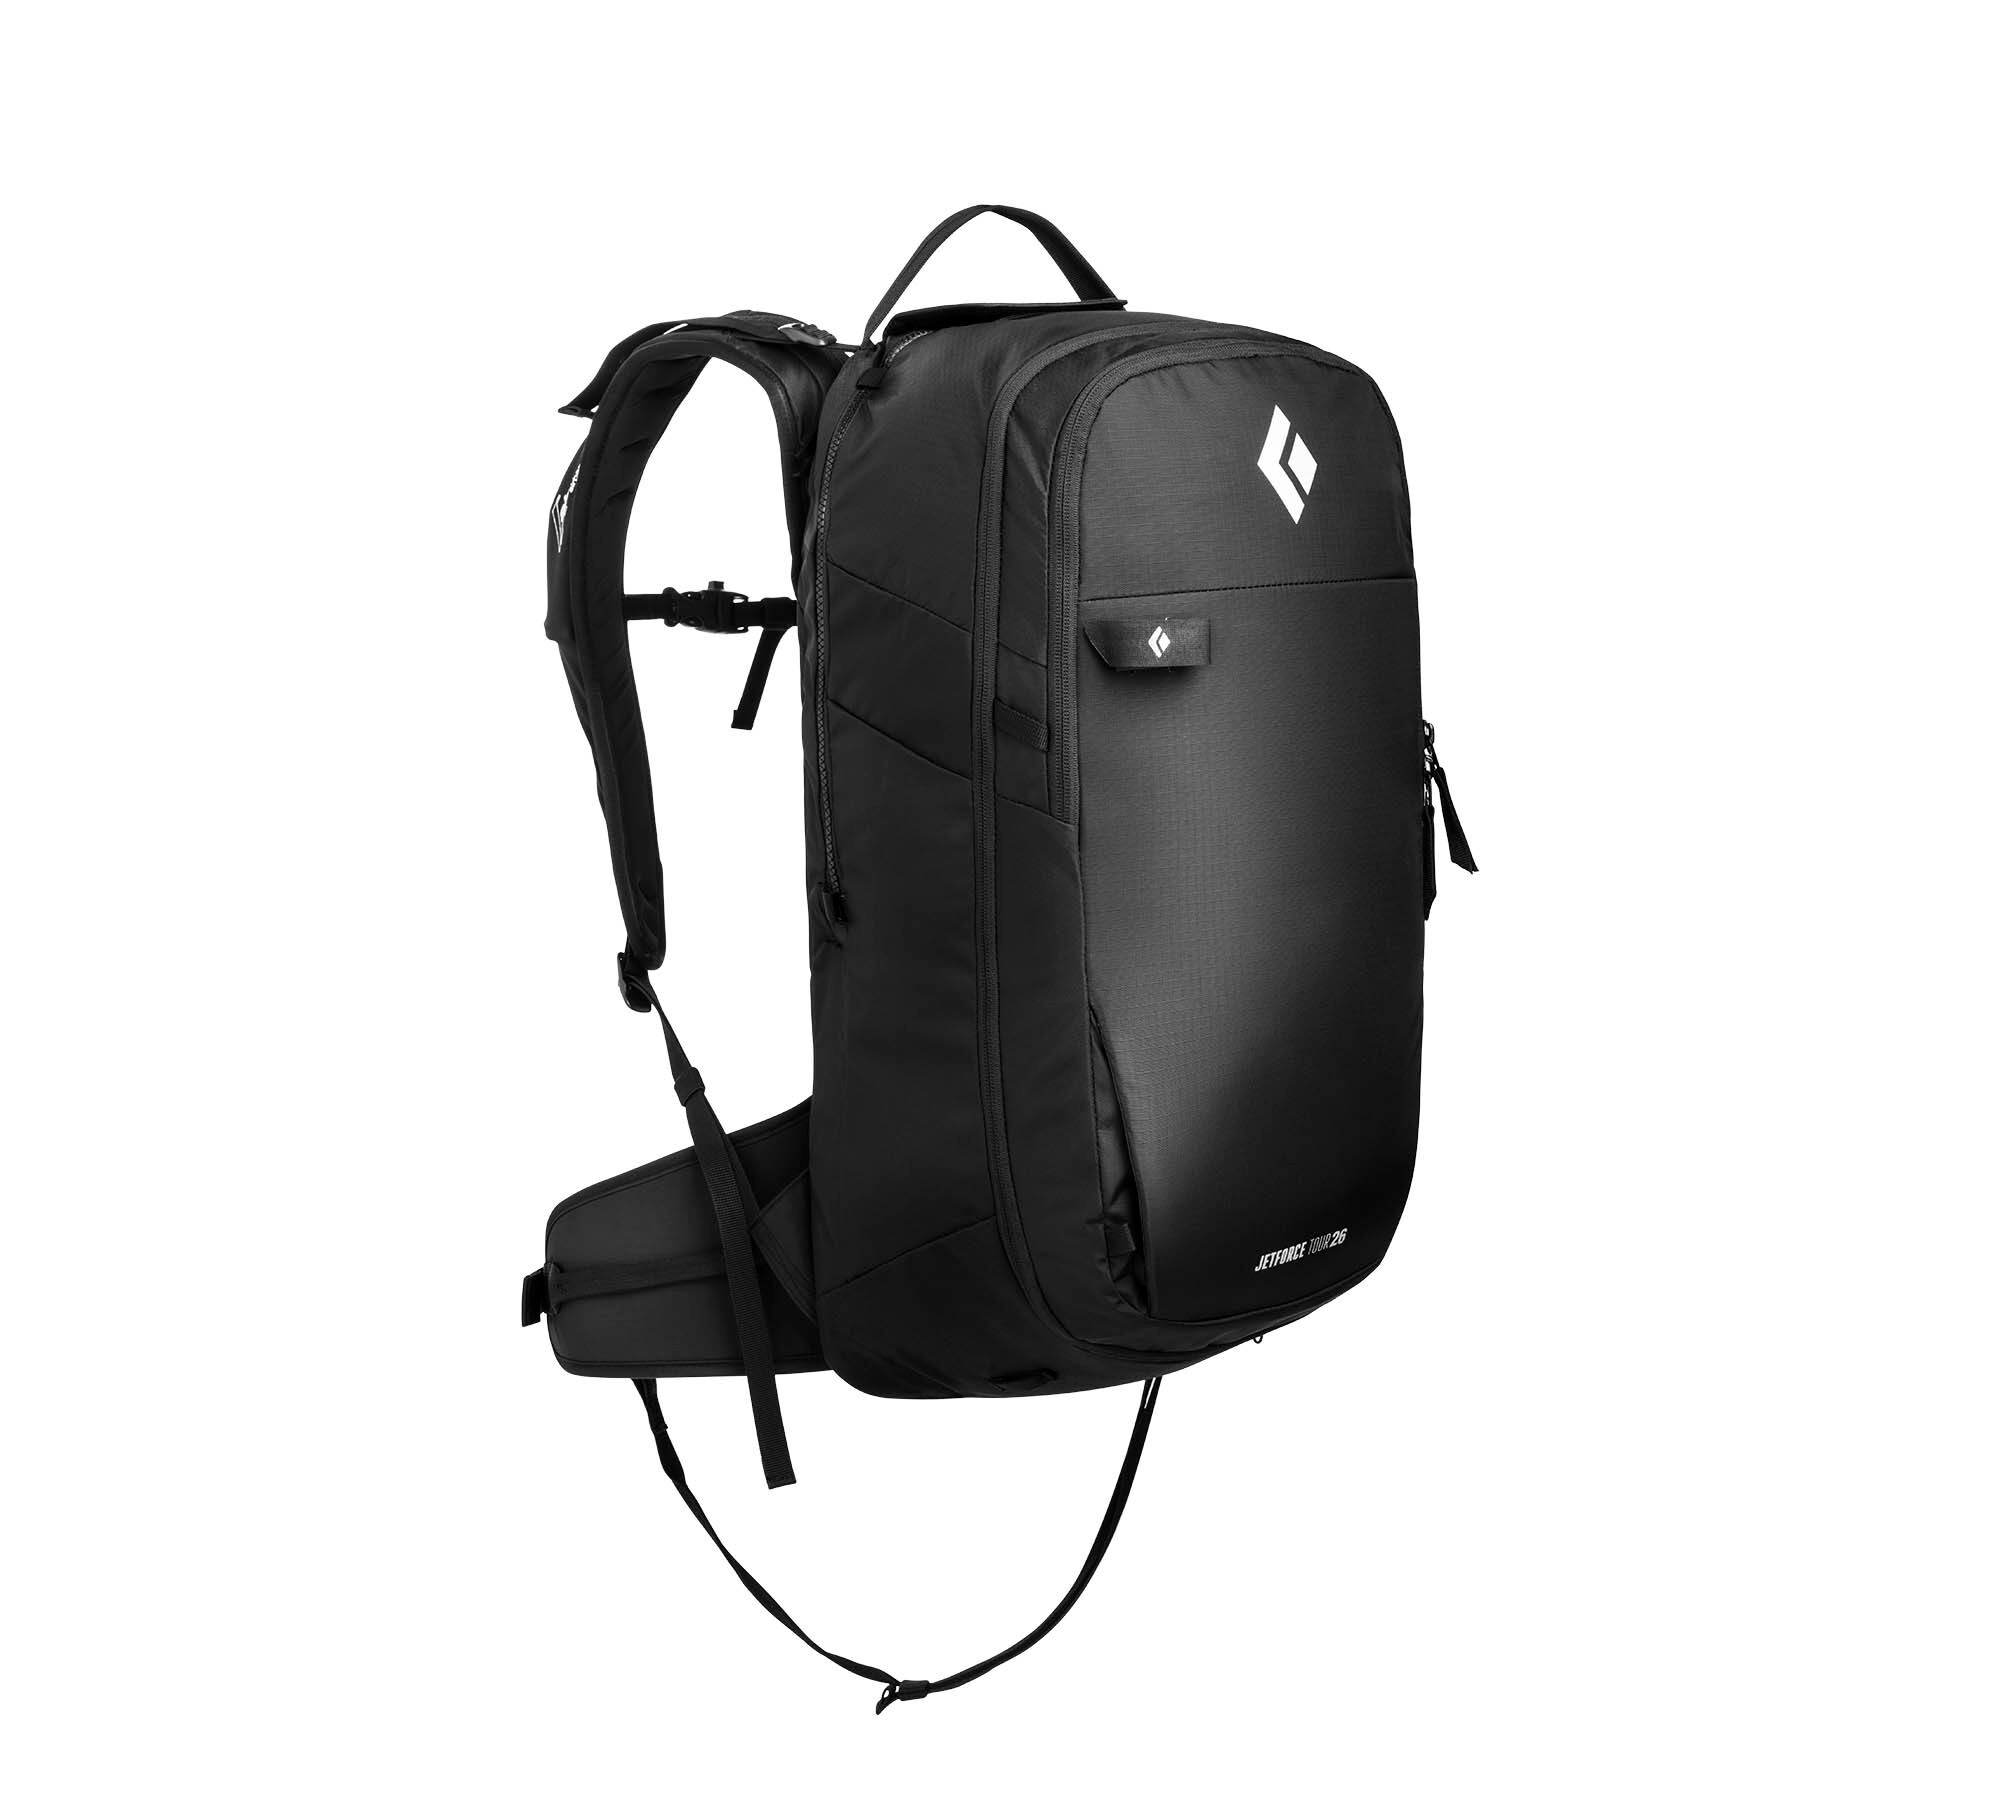 Black Diamond Jetforce Tour Pack 26L - Avalanche backpack